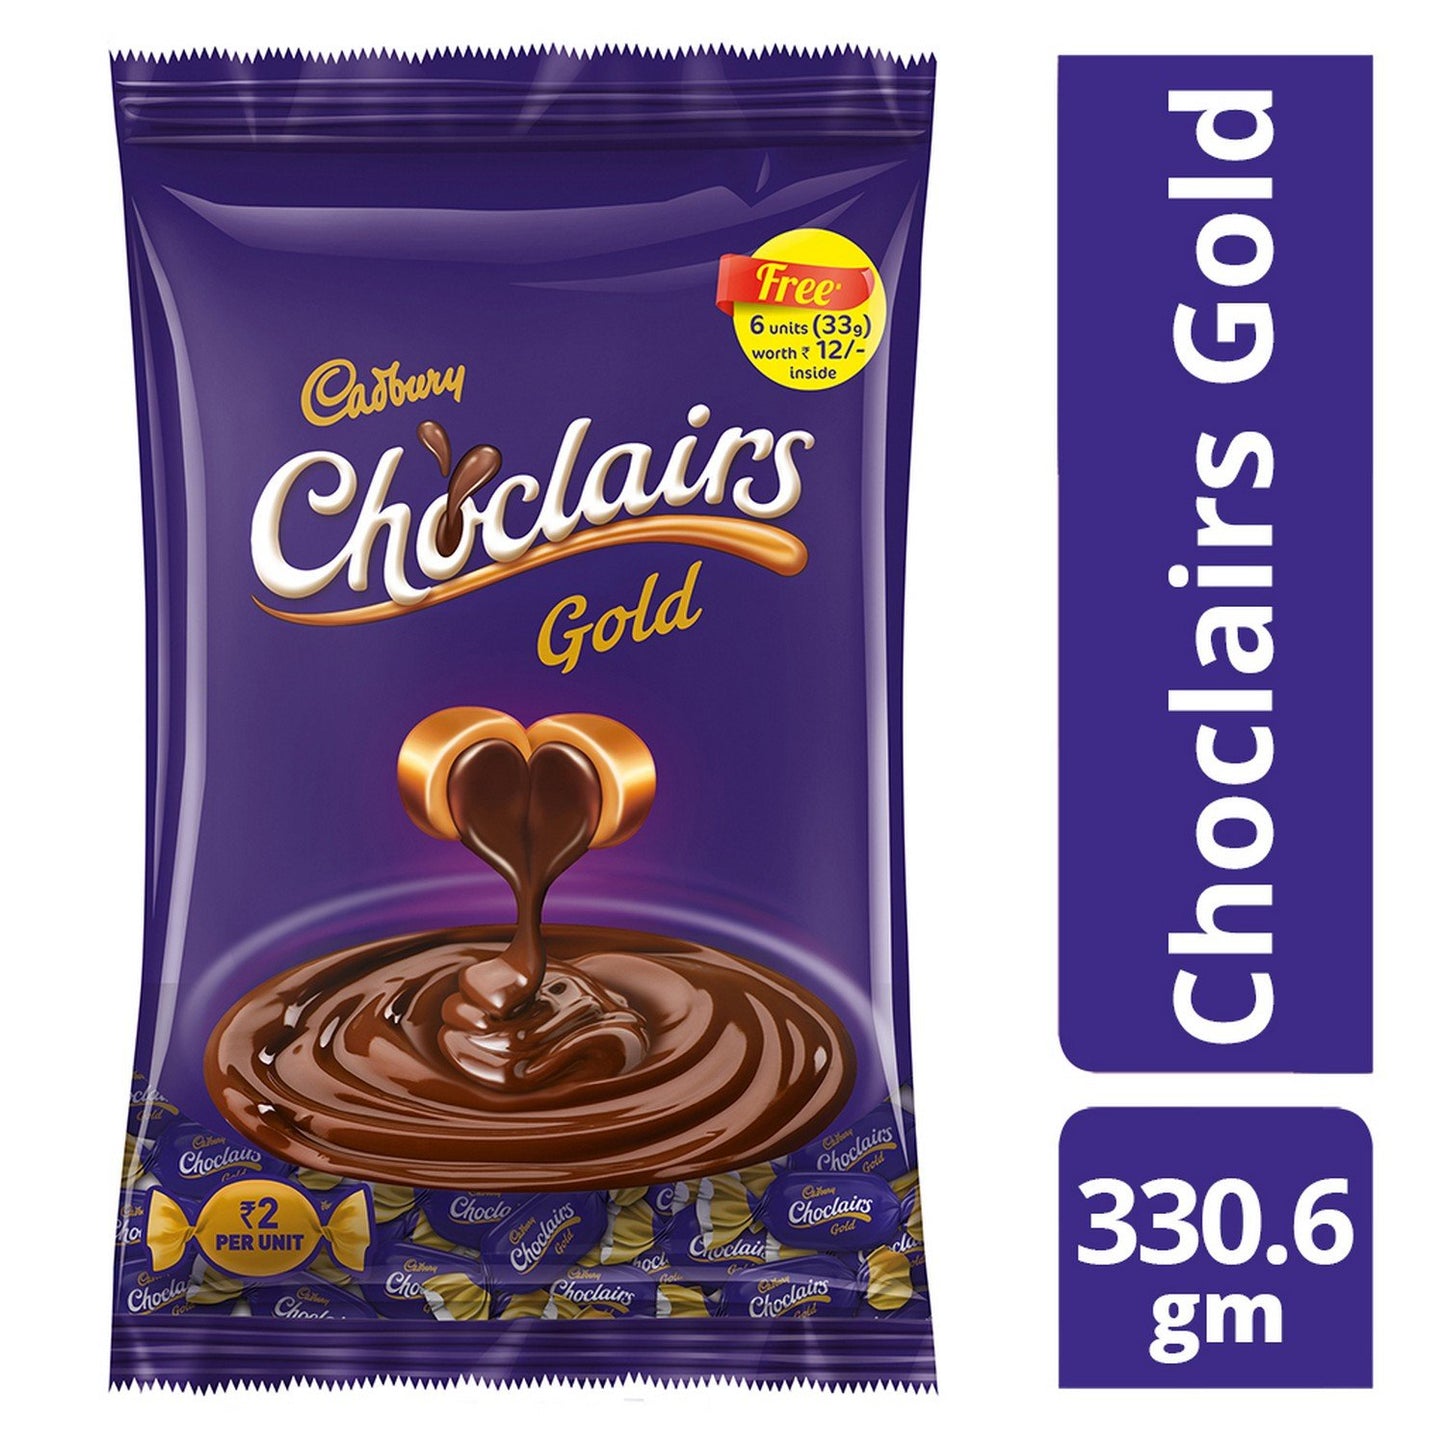 Cadbury Choclairs Gold, 330.6g Pouch (58 Units, Free 6units)